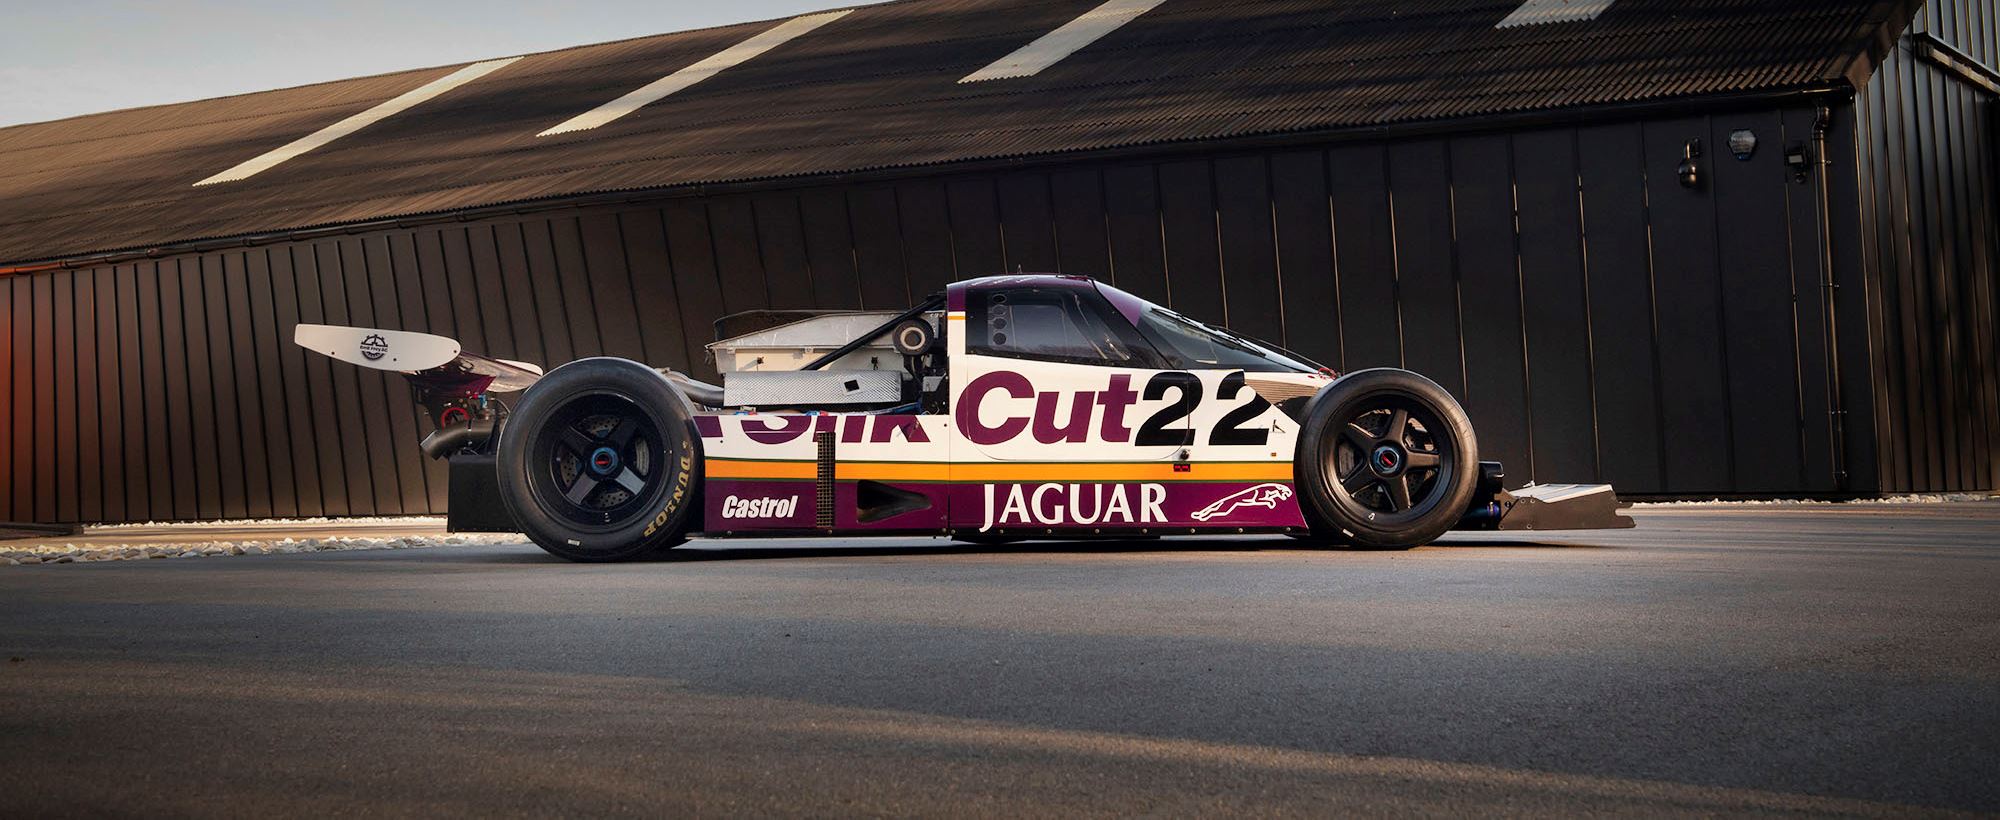 Jaguar XJR9 029.jpg